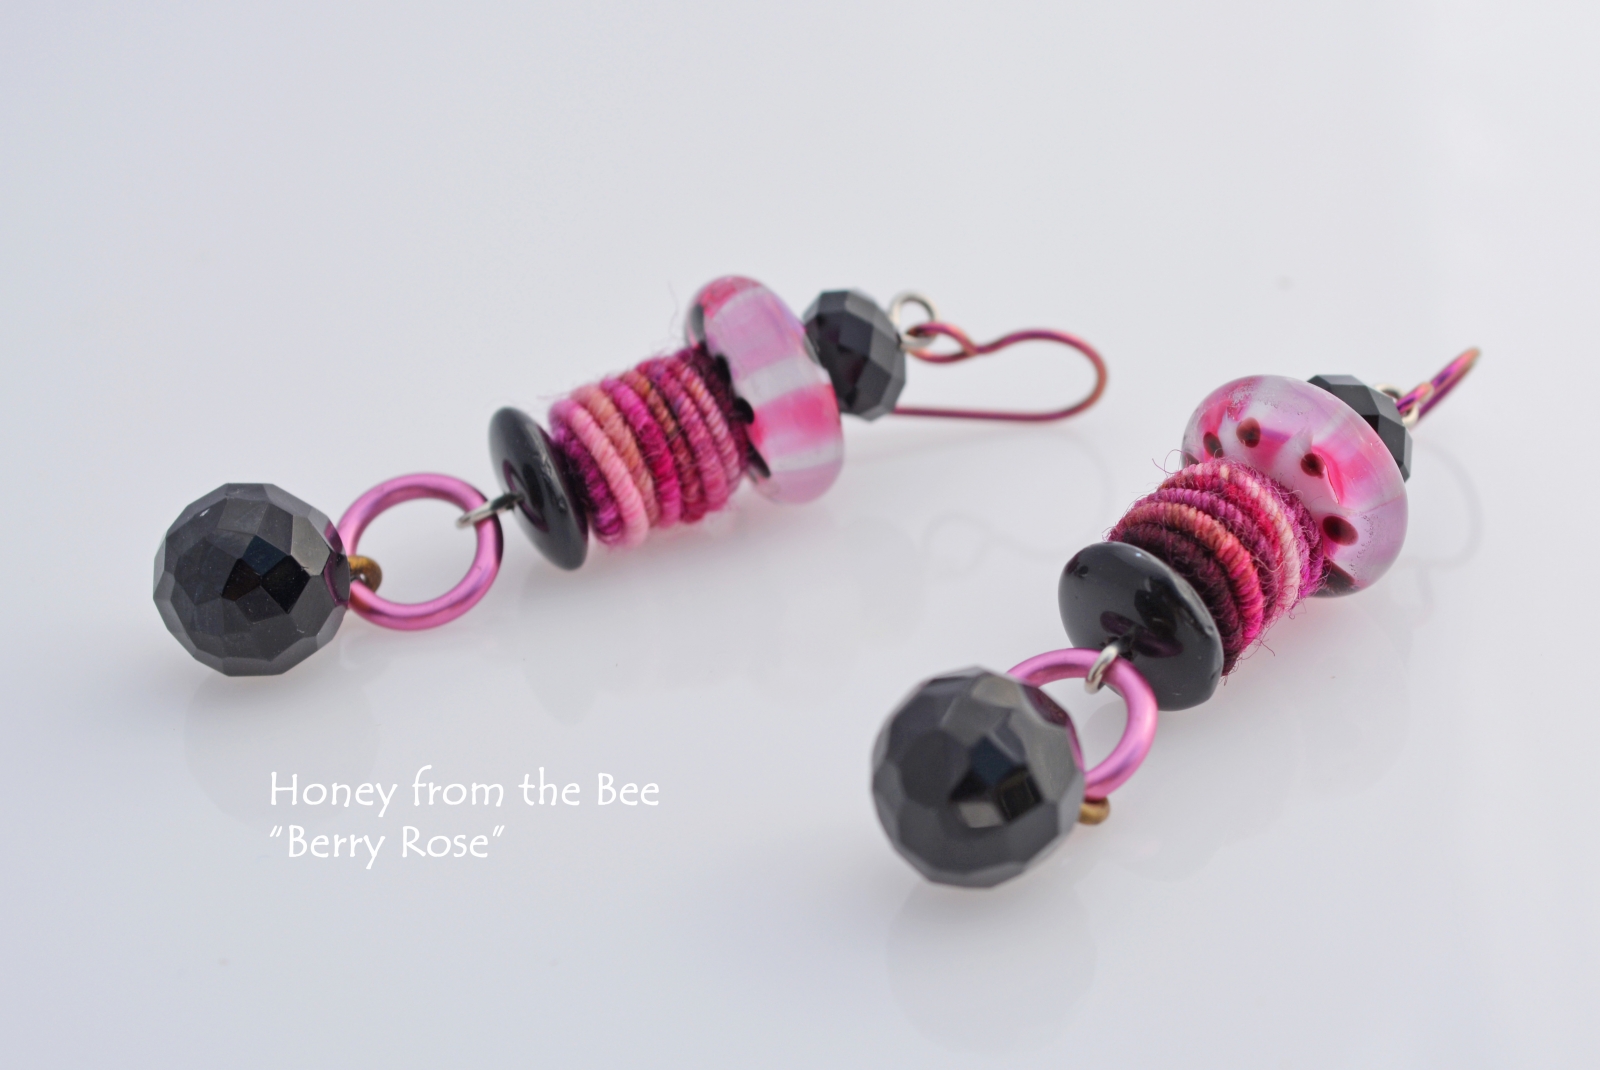 Berry and Black Boho style earrings